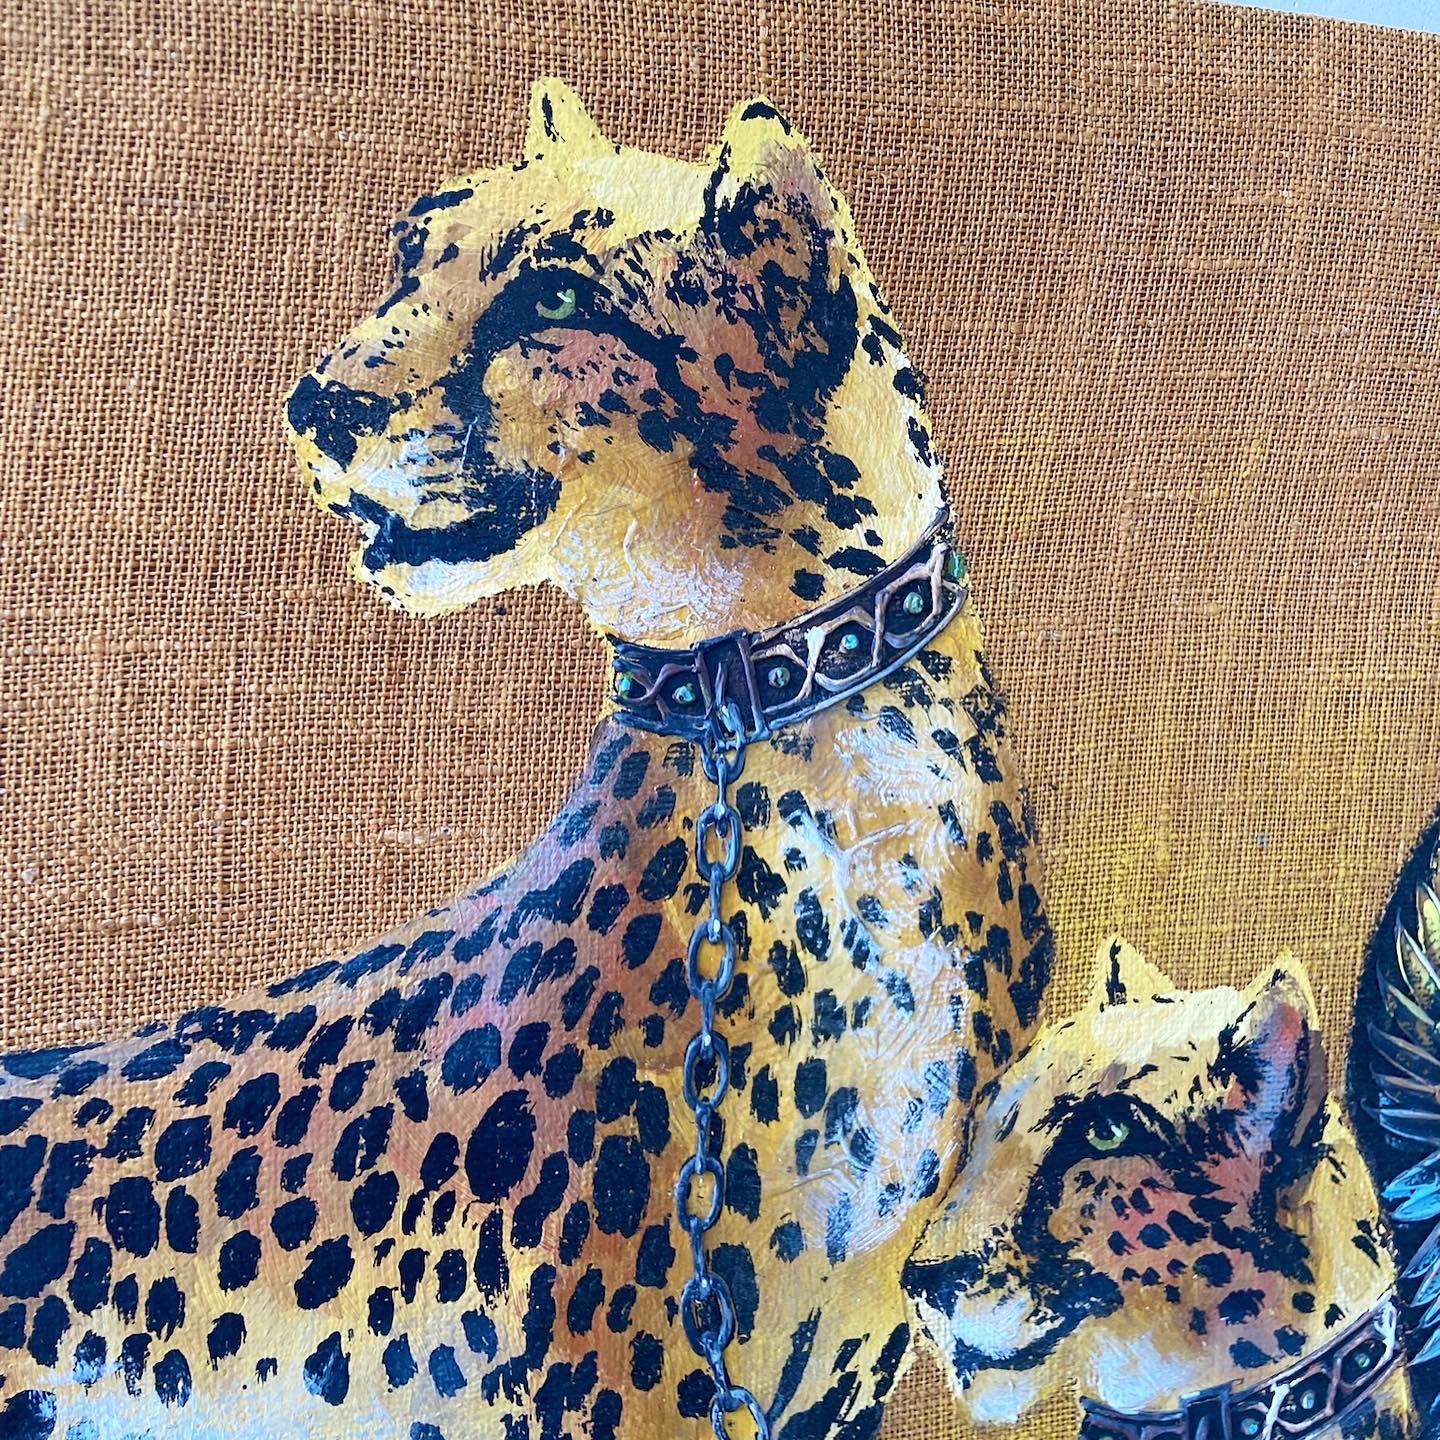 American Mid-Century Modern Large Painting of Cheetahs on Burlap Signed Wyman